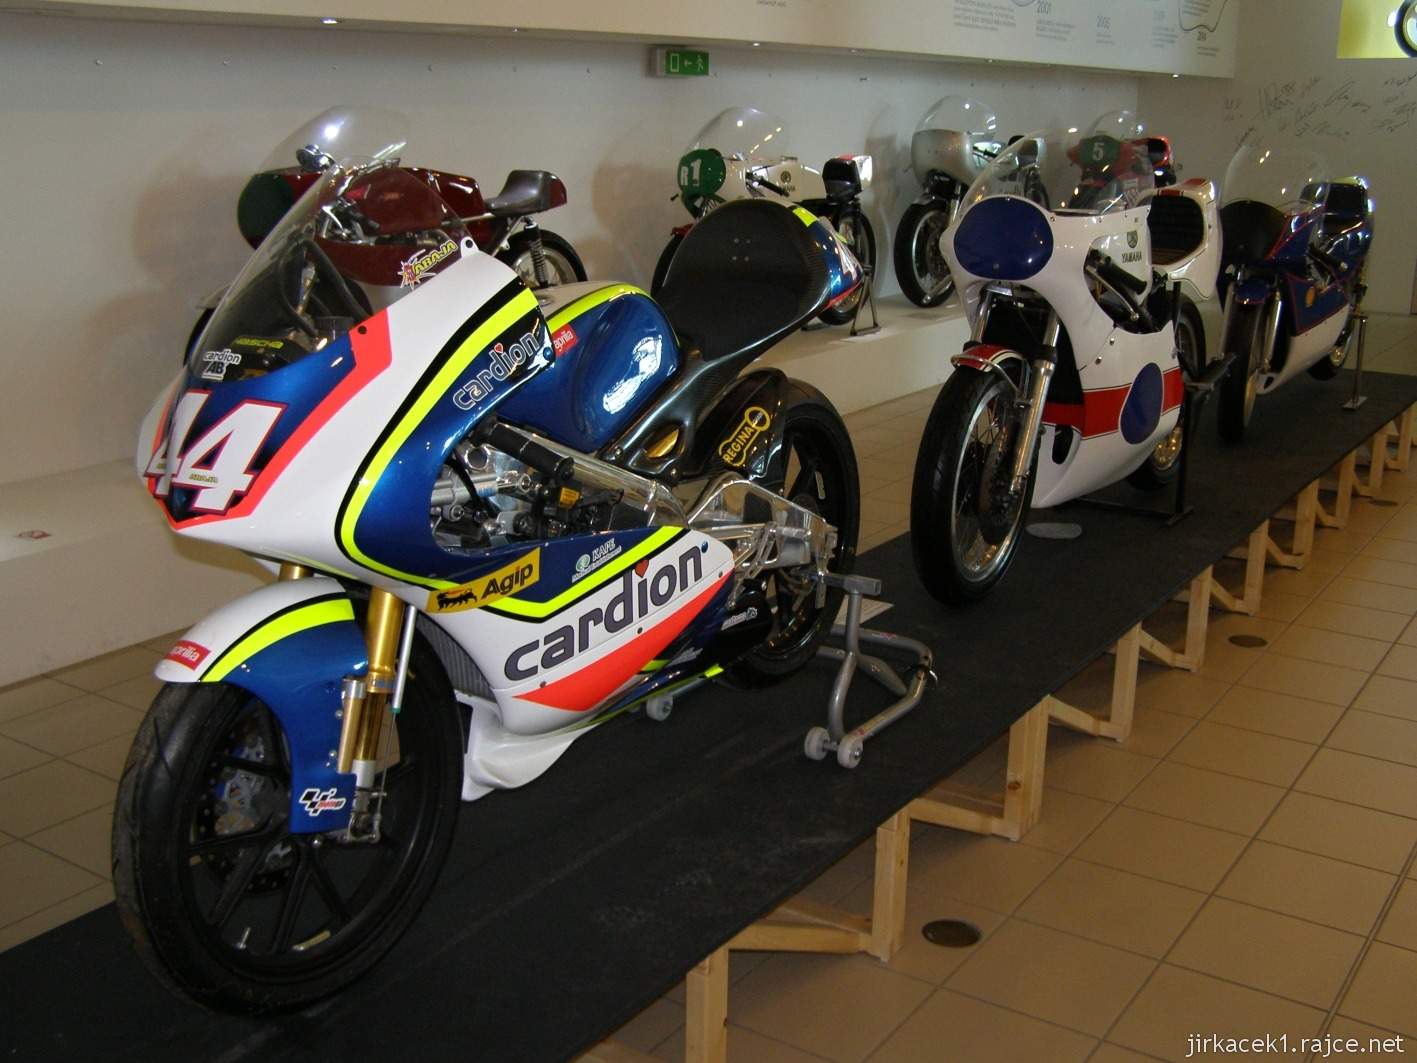 Brno - Technické muzeum 07 - expozice motorky